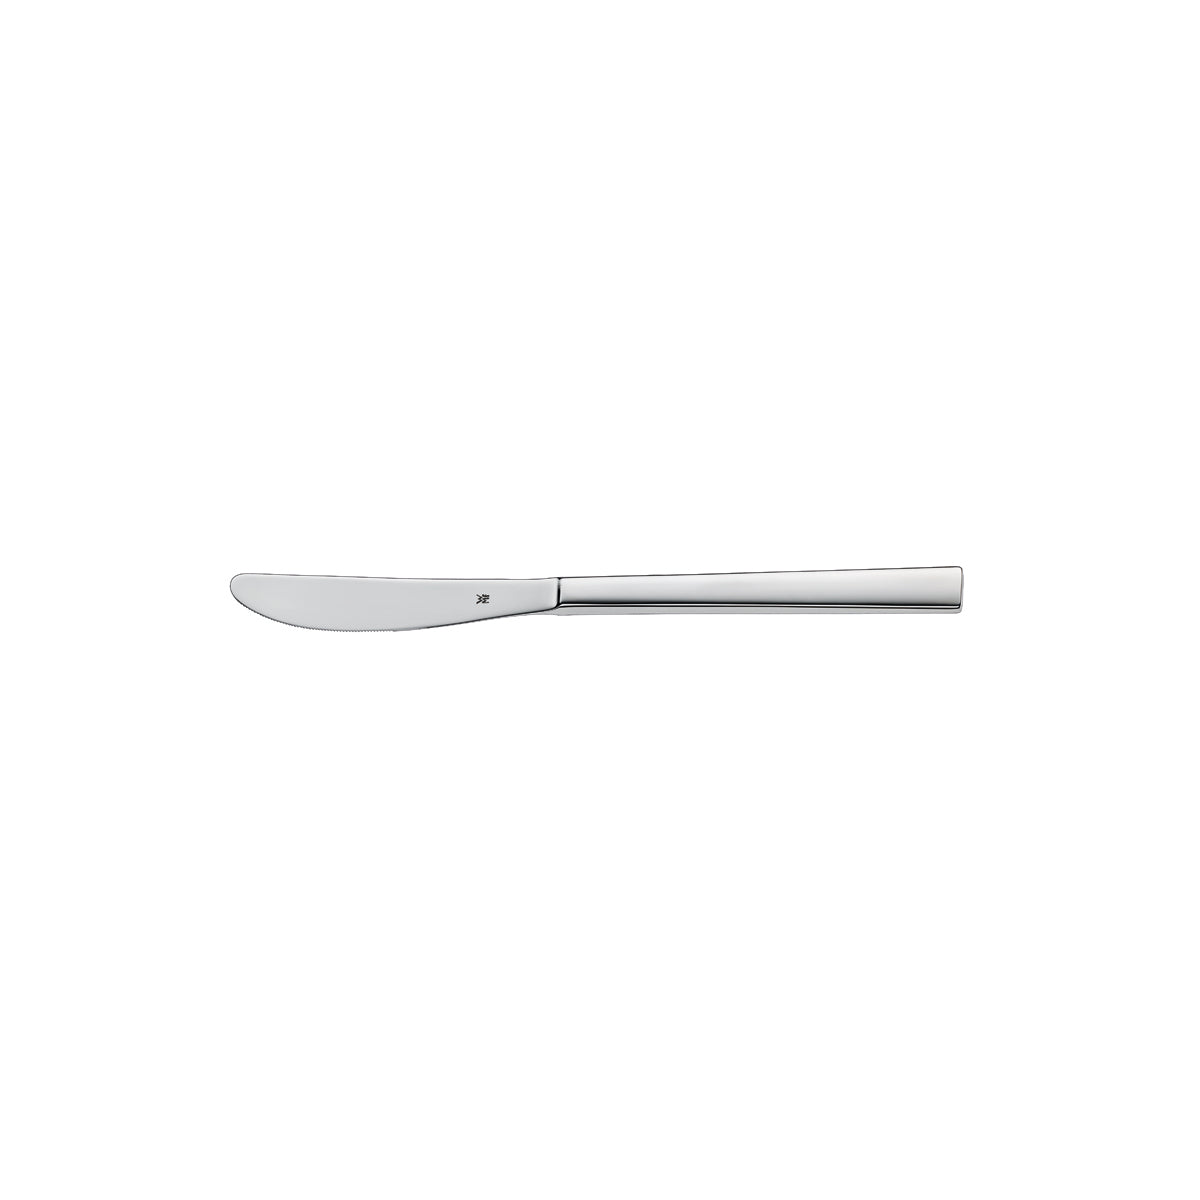 54.1803.6049 WMF Telos Table Knife Stainless Steel Tomkin Australia Hospitality Supplies